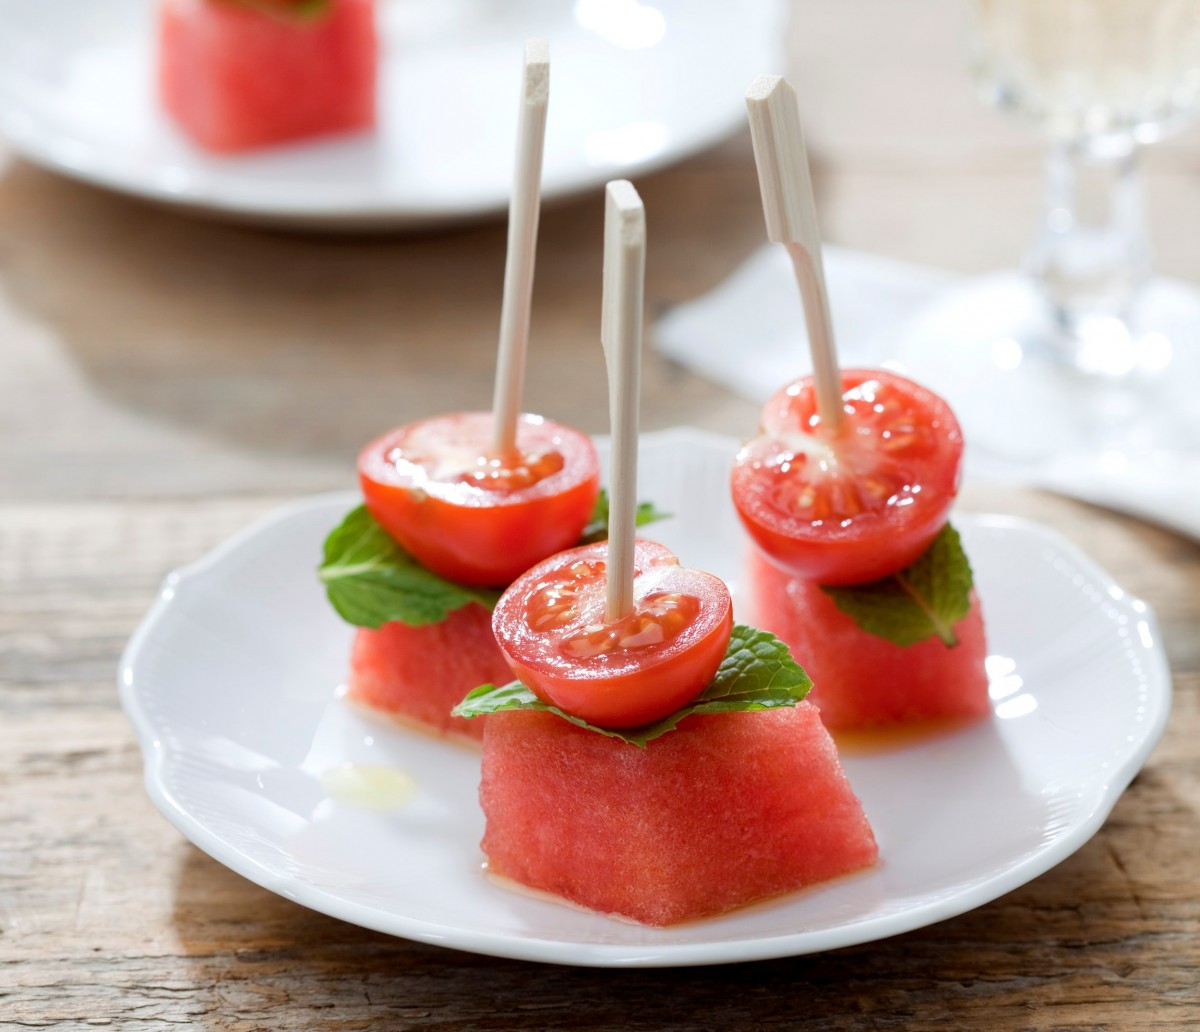 Cherry tomato, watermelon and mint tapas